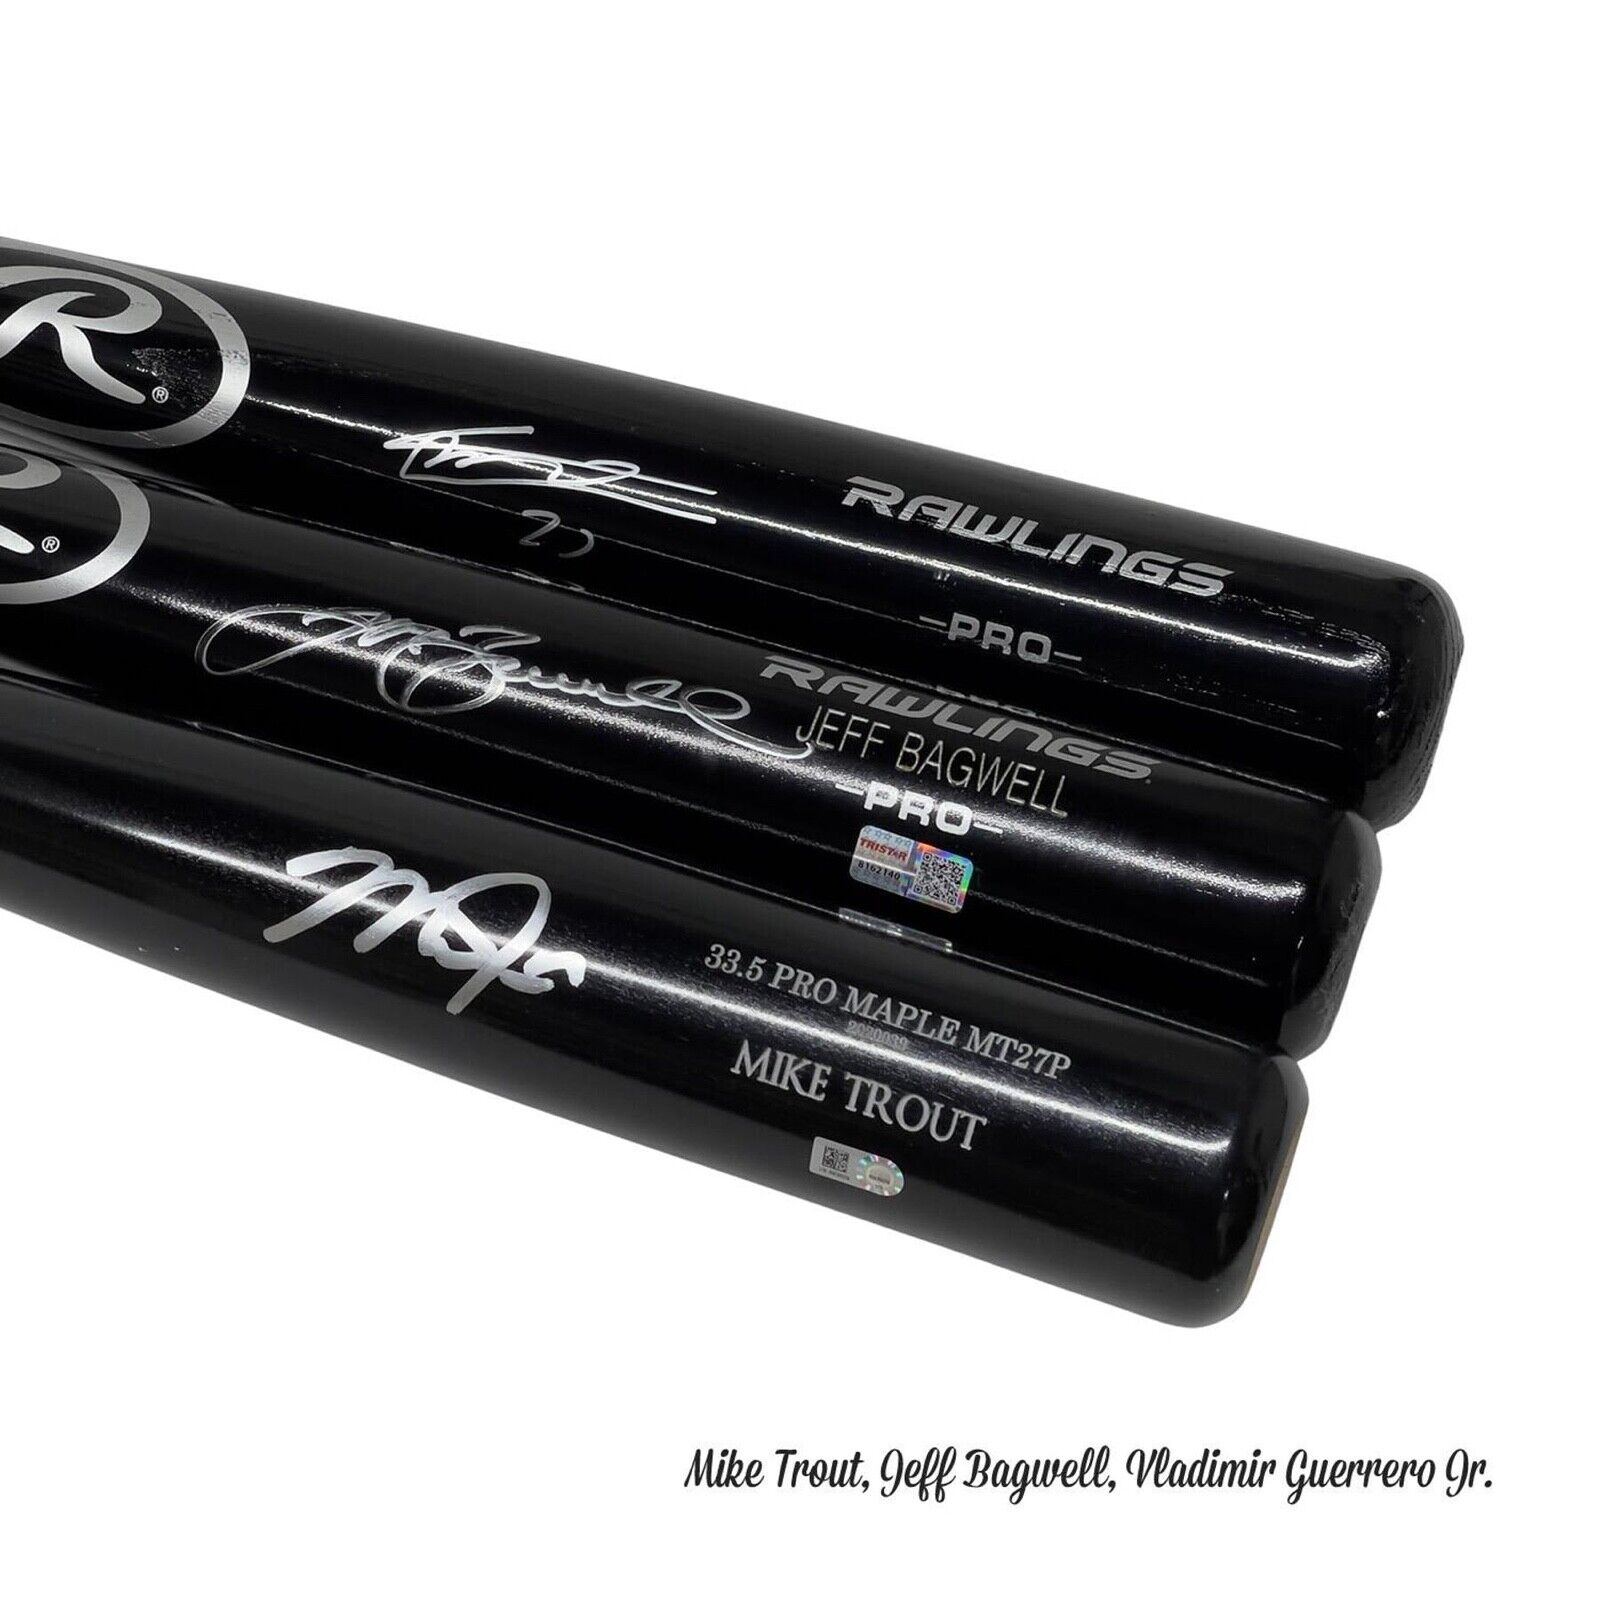 PHILADELPHIA PHILLIES HitParade Autographed Baseball Bat S15 - Live Break 1box